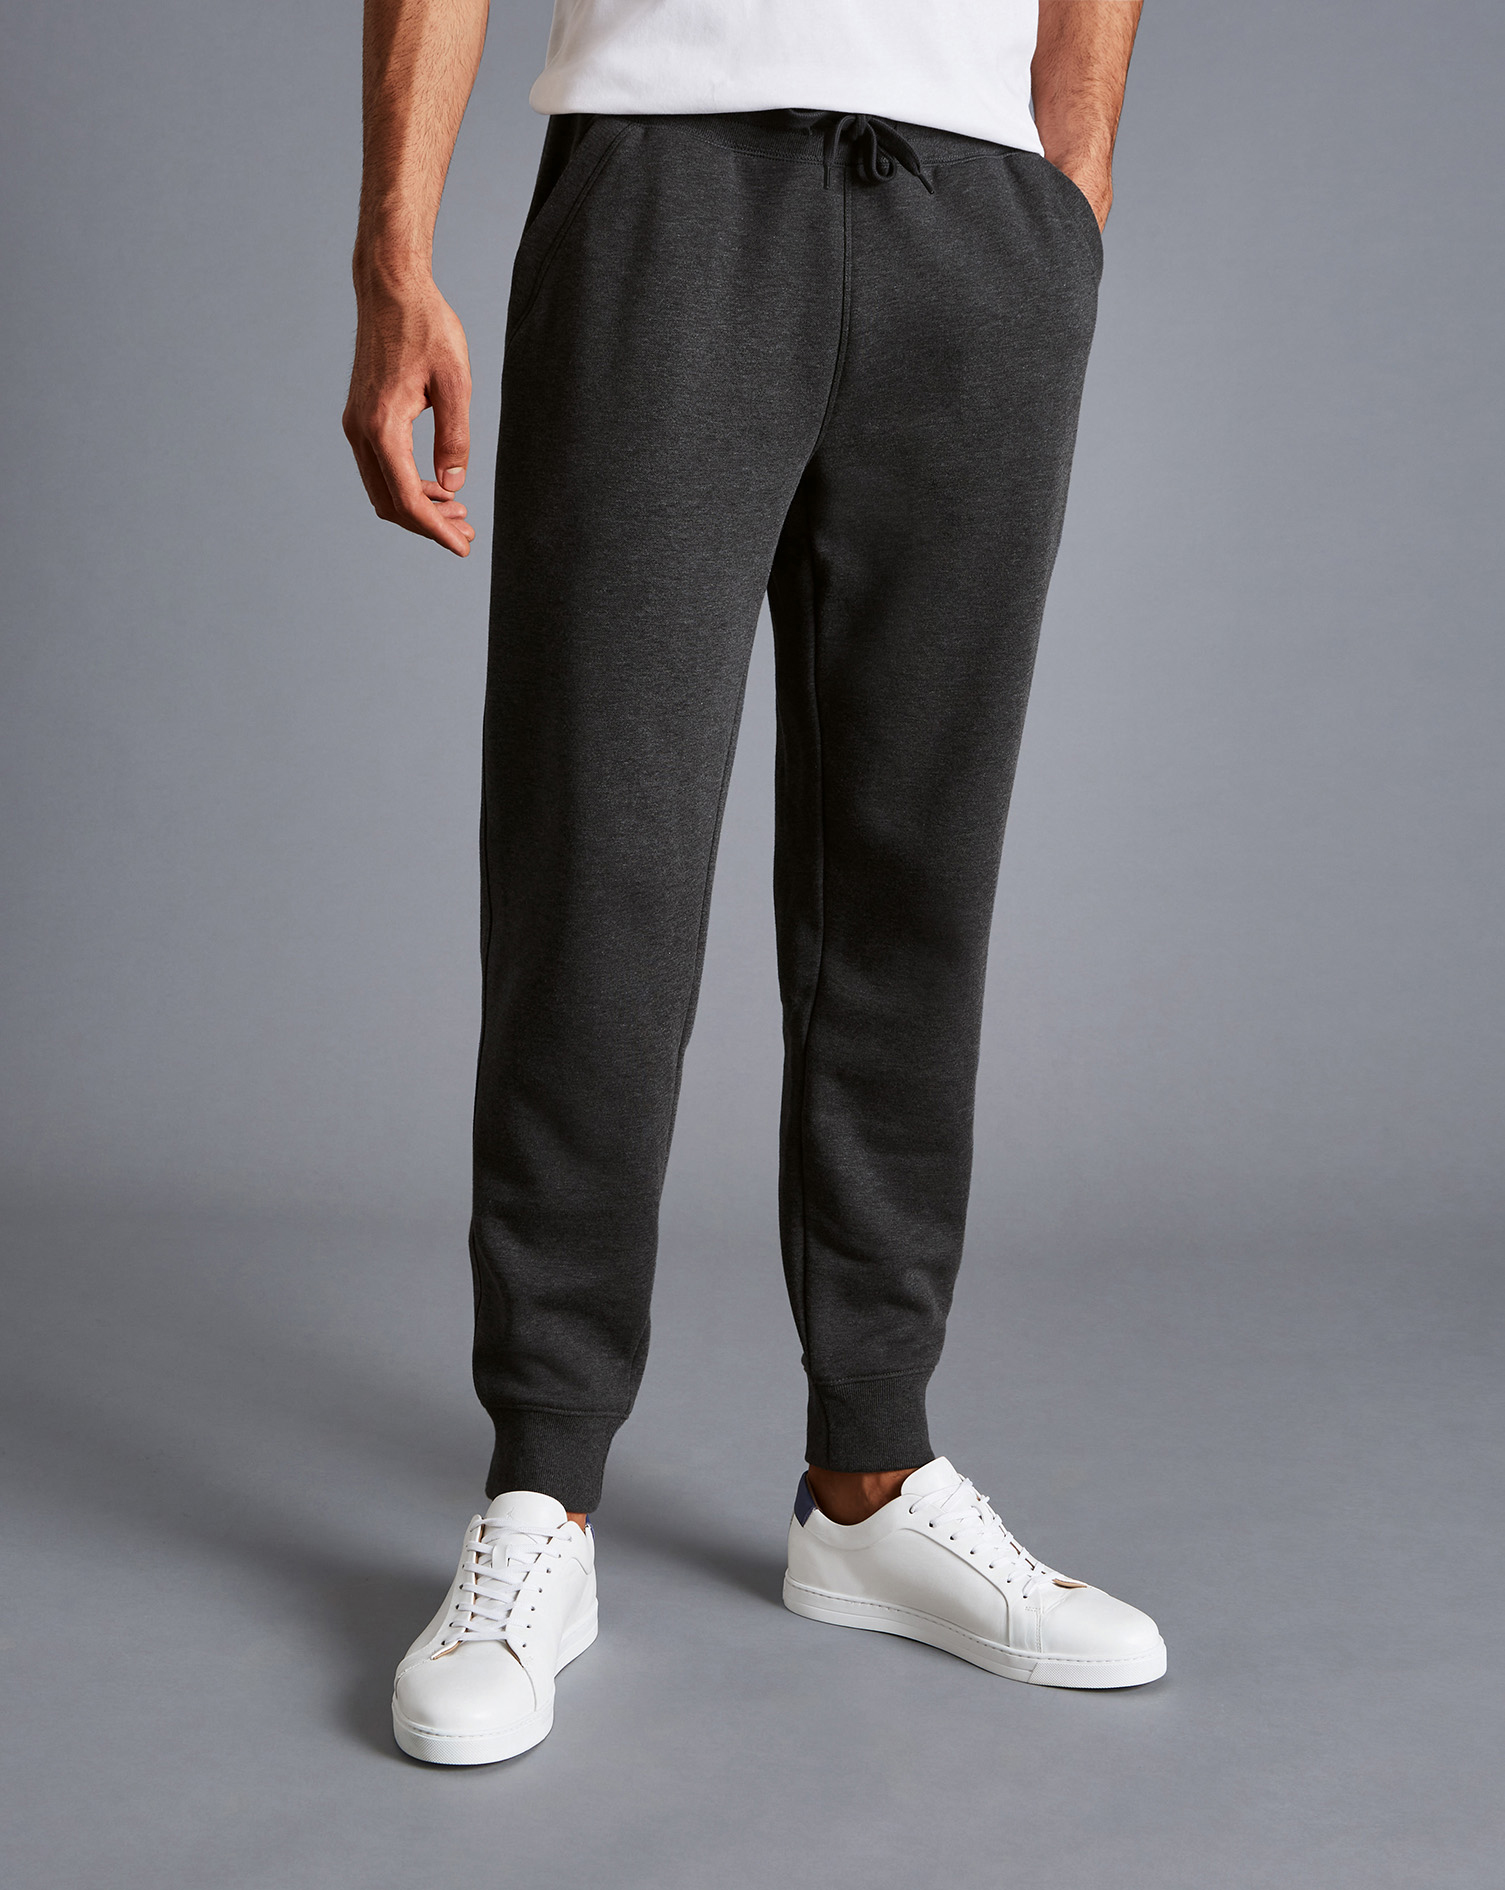 Men's Charles Tyrwhitt Jersey Joggers - Dark Grey Melange Size Large Cotton
